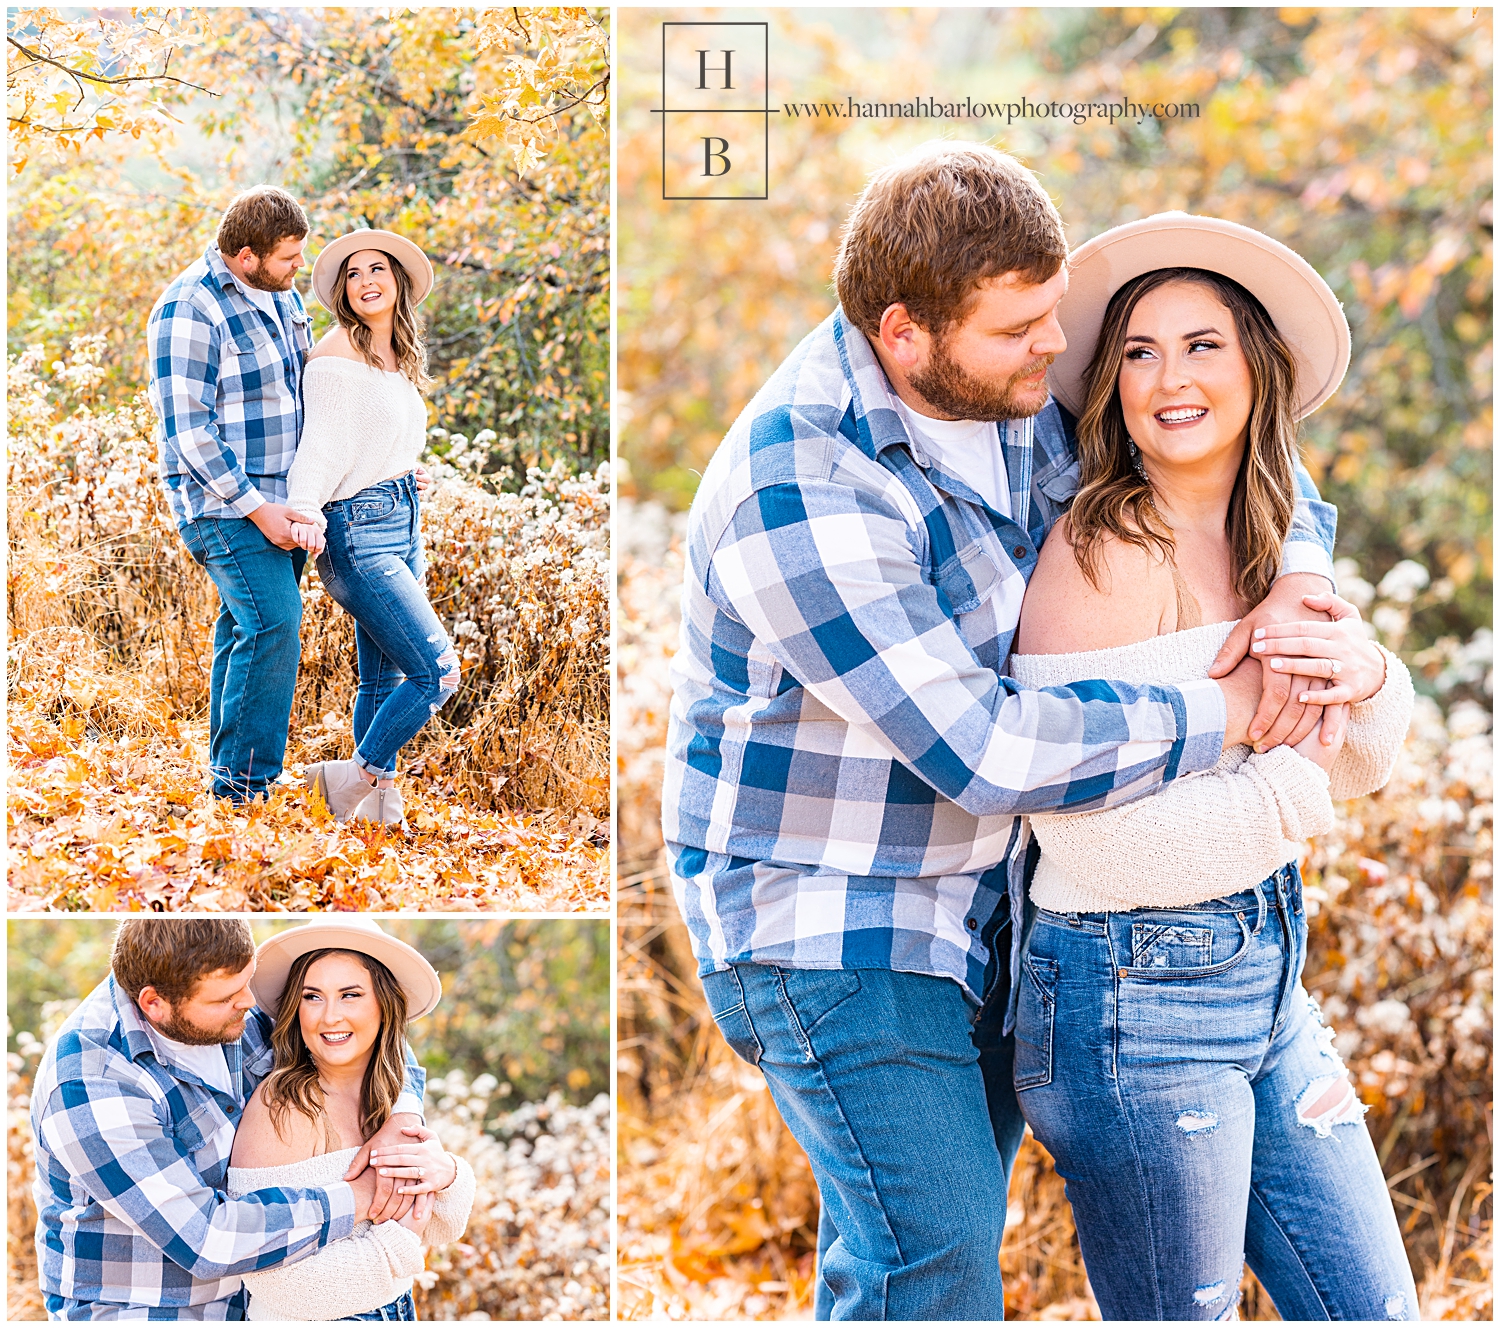 Man embraces future wife in fall foliage field